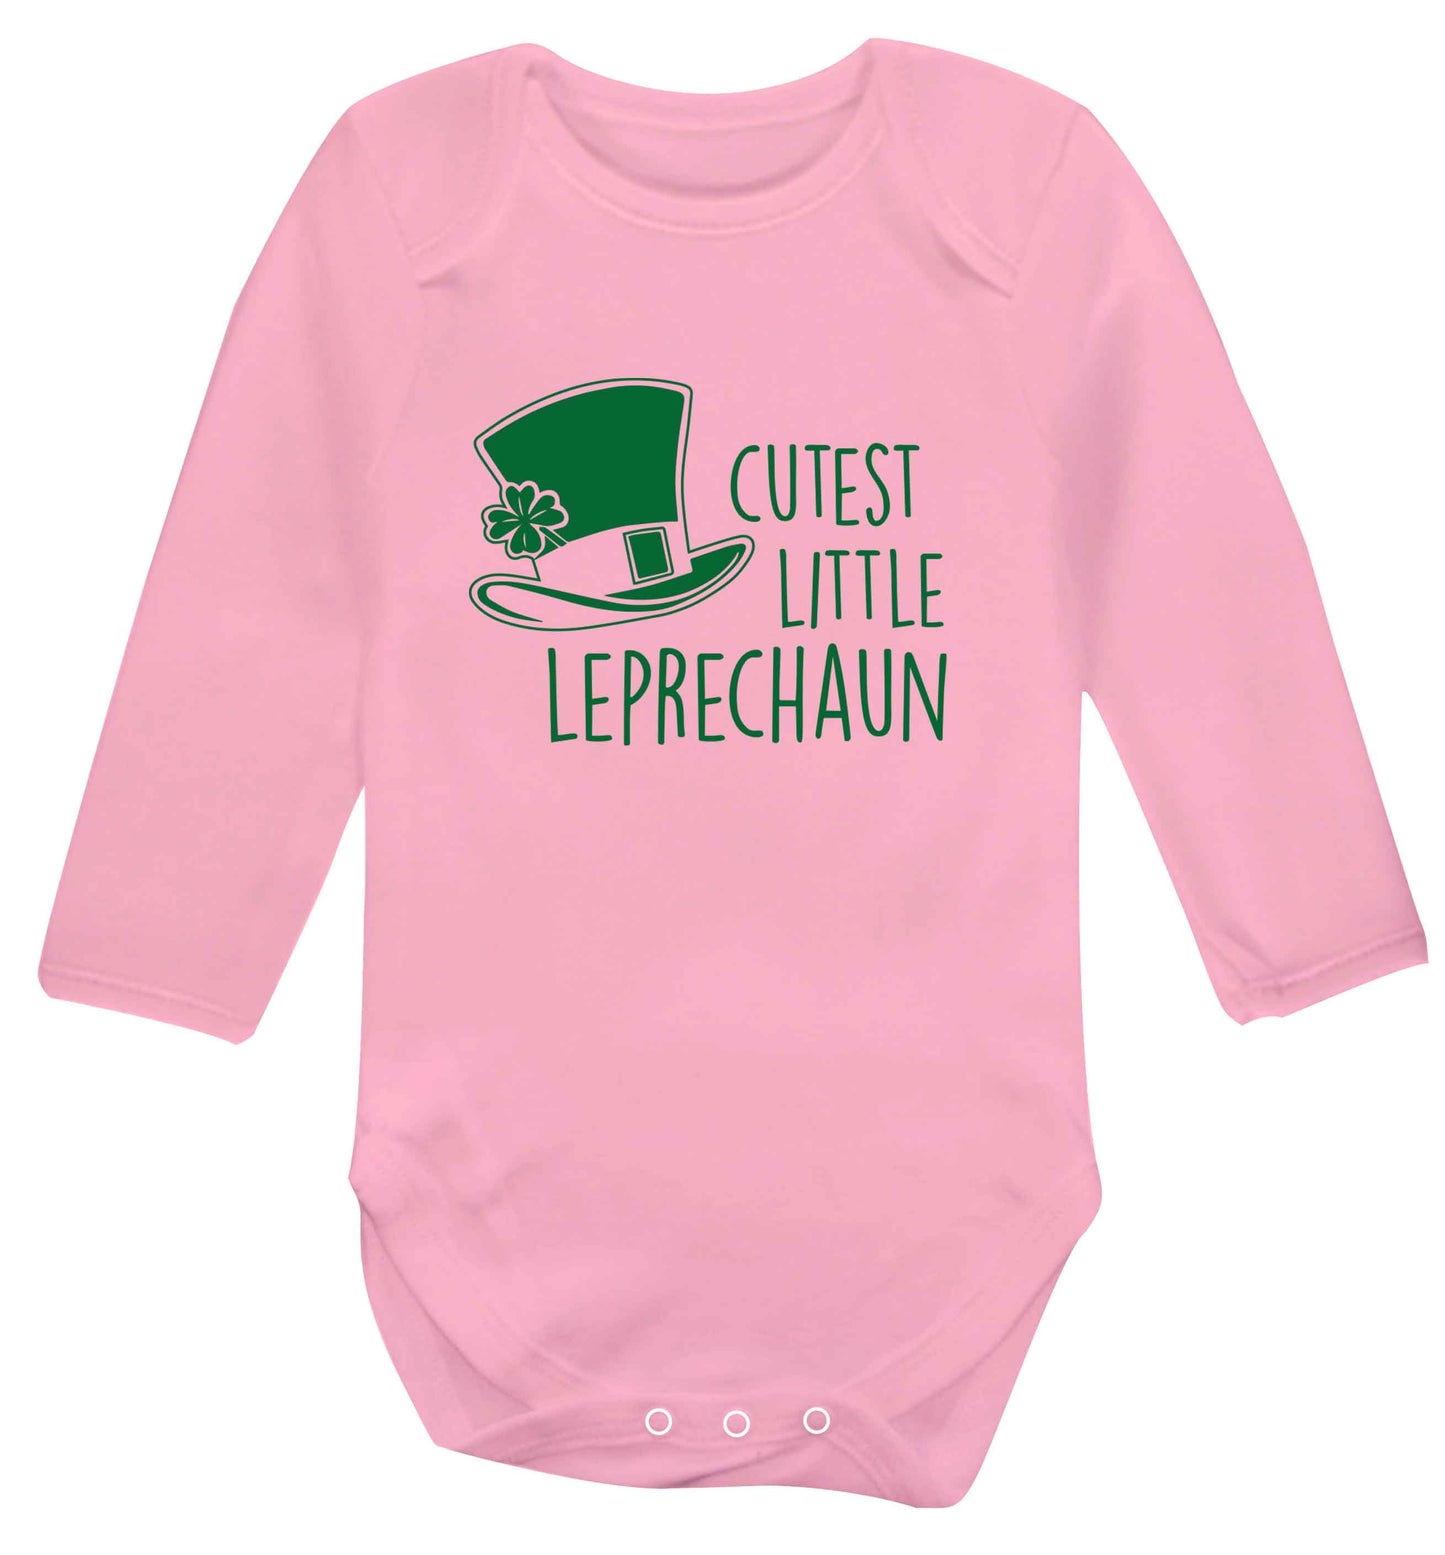 Cutest little leprechaun baby vest long sleeved pale pink 6-12 months